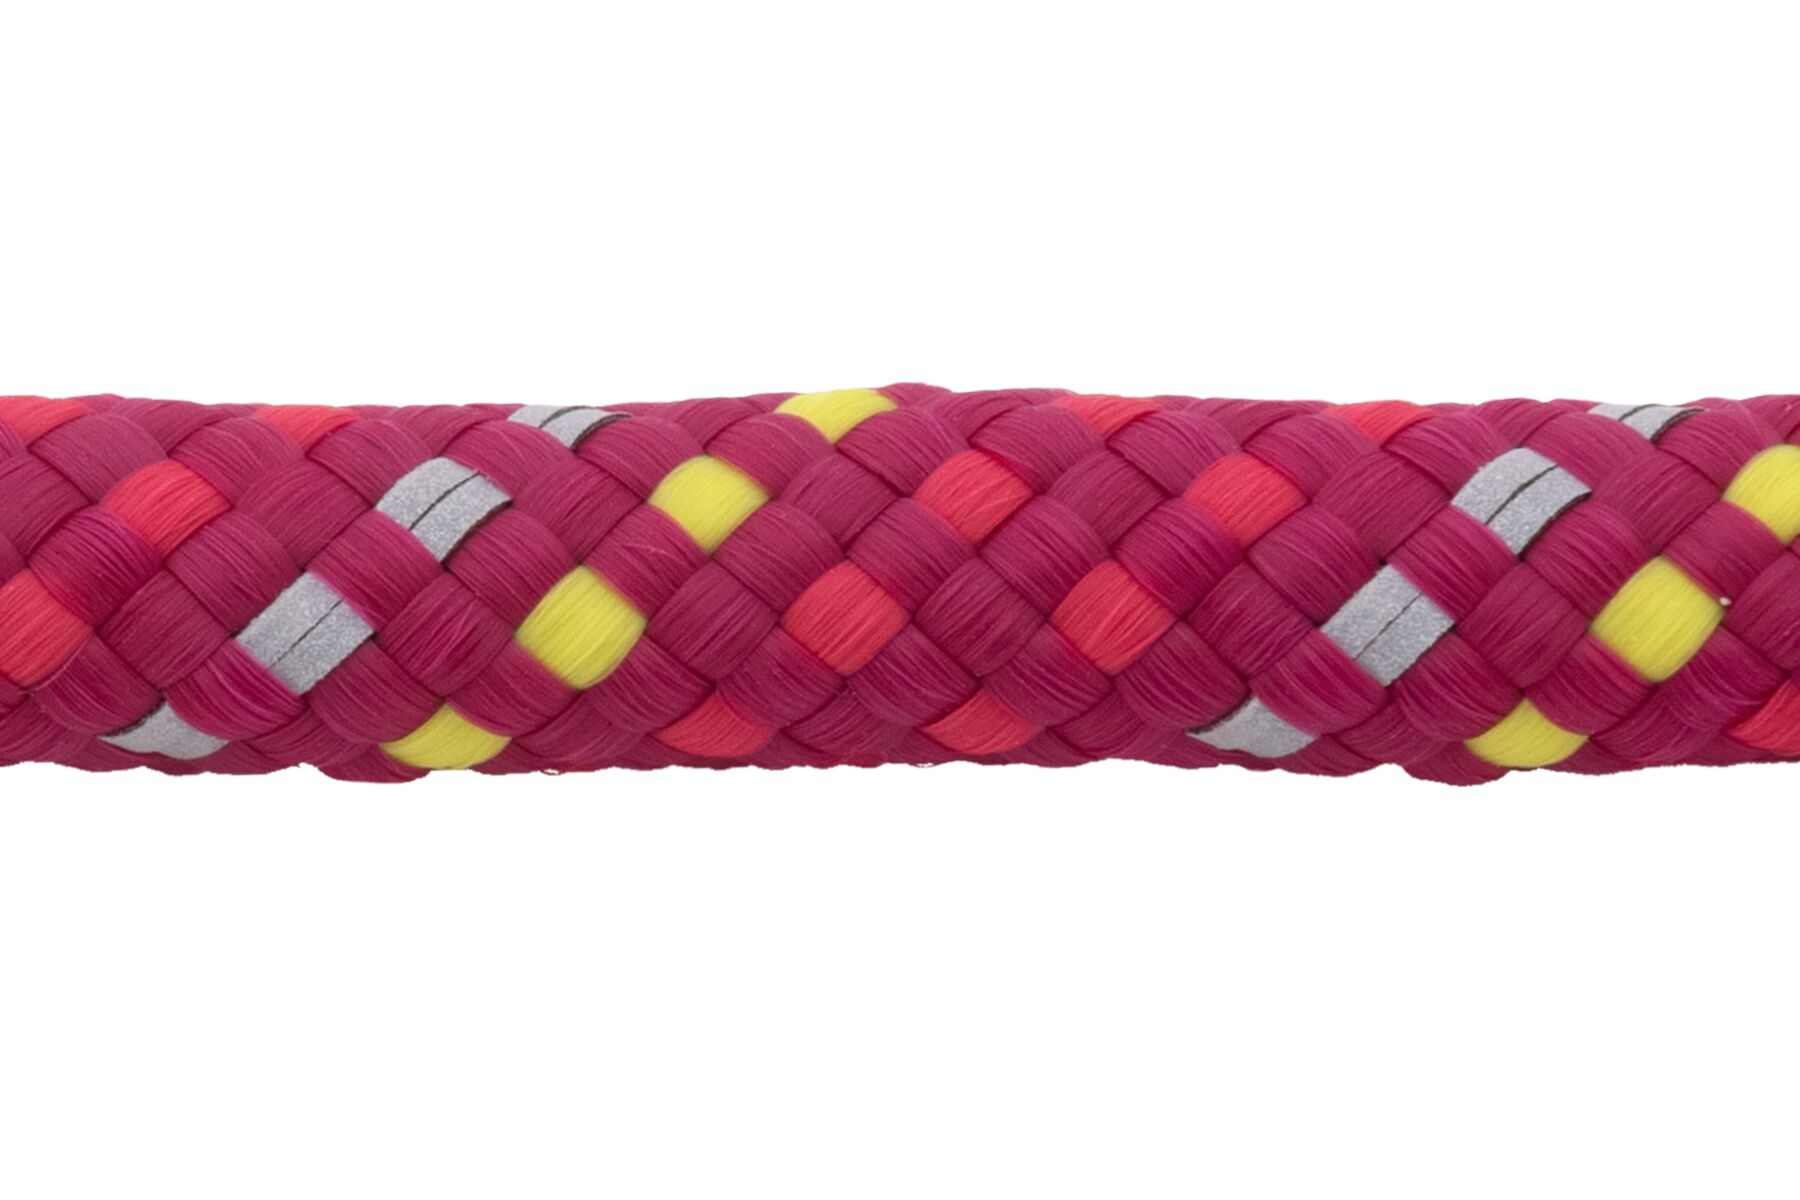 Coleira Knot-a-collar da Ruffwear Hibiscus Pink